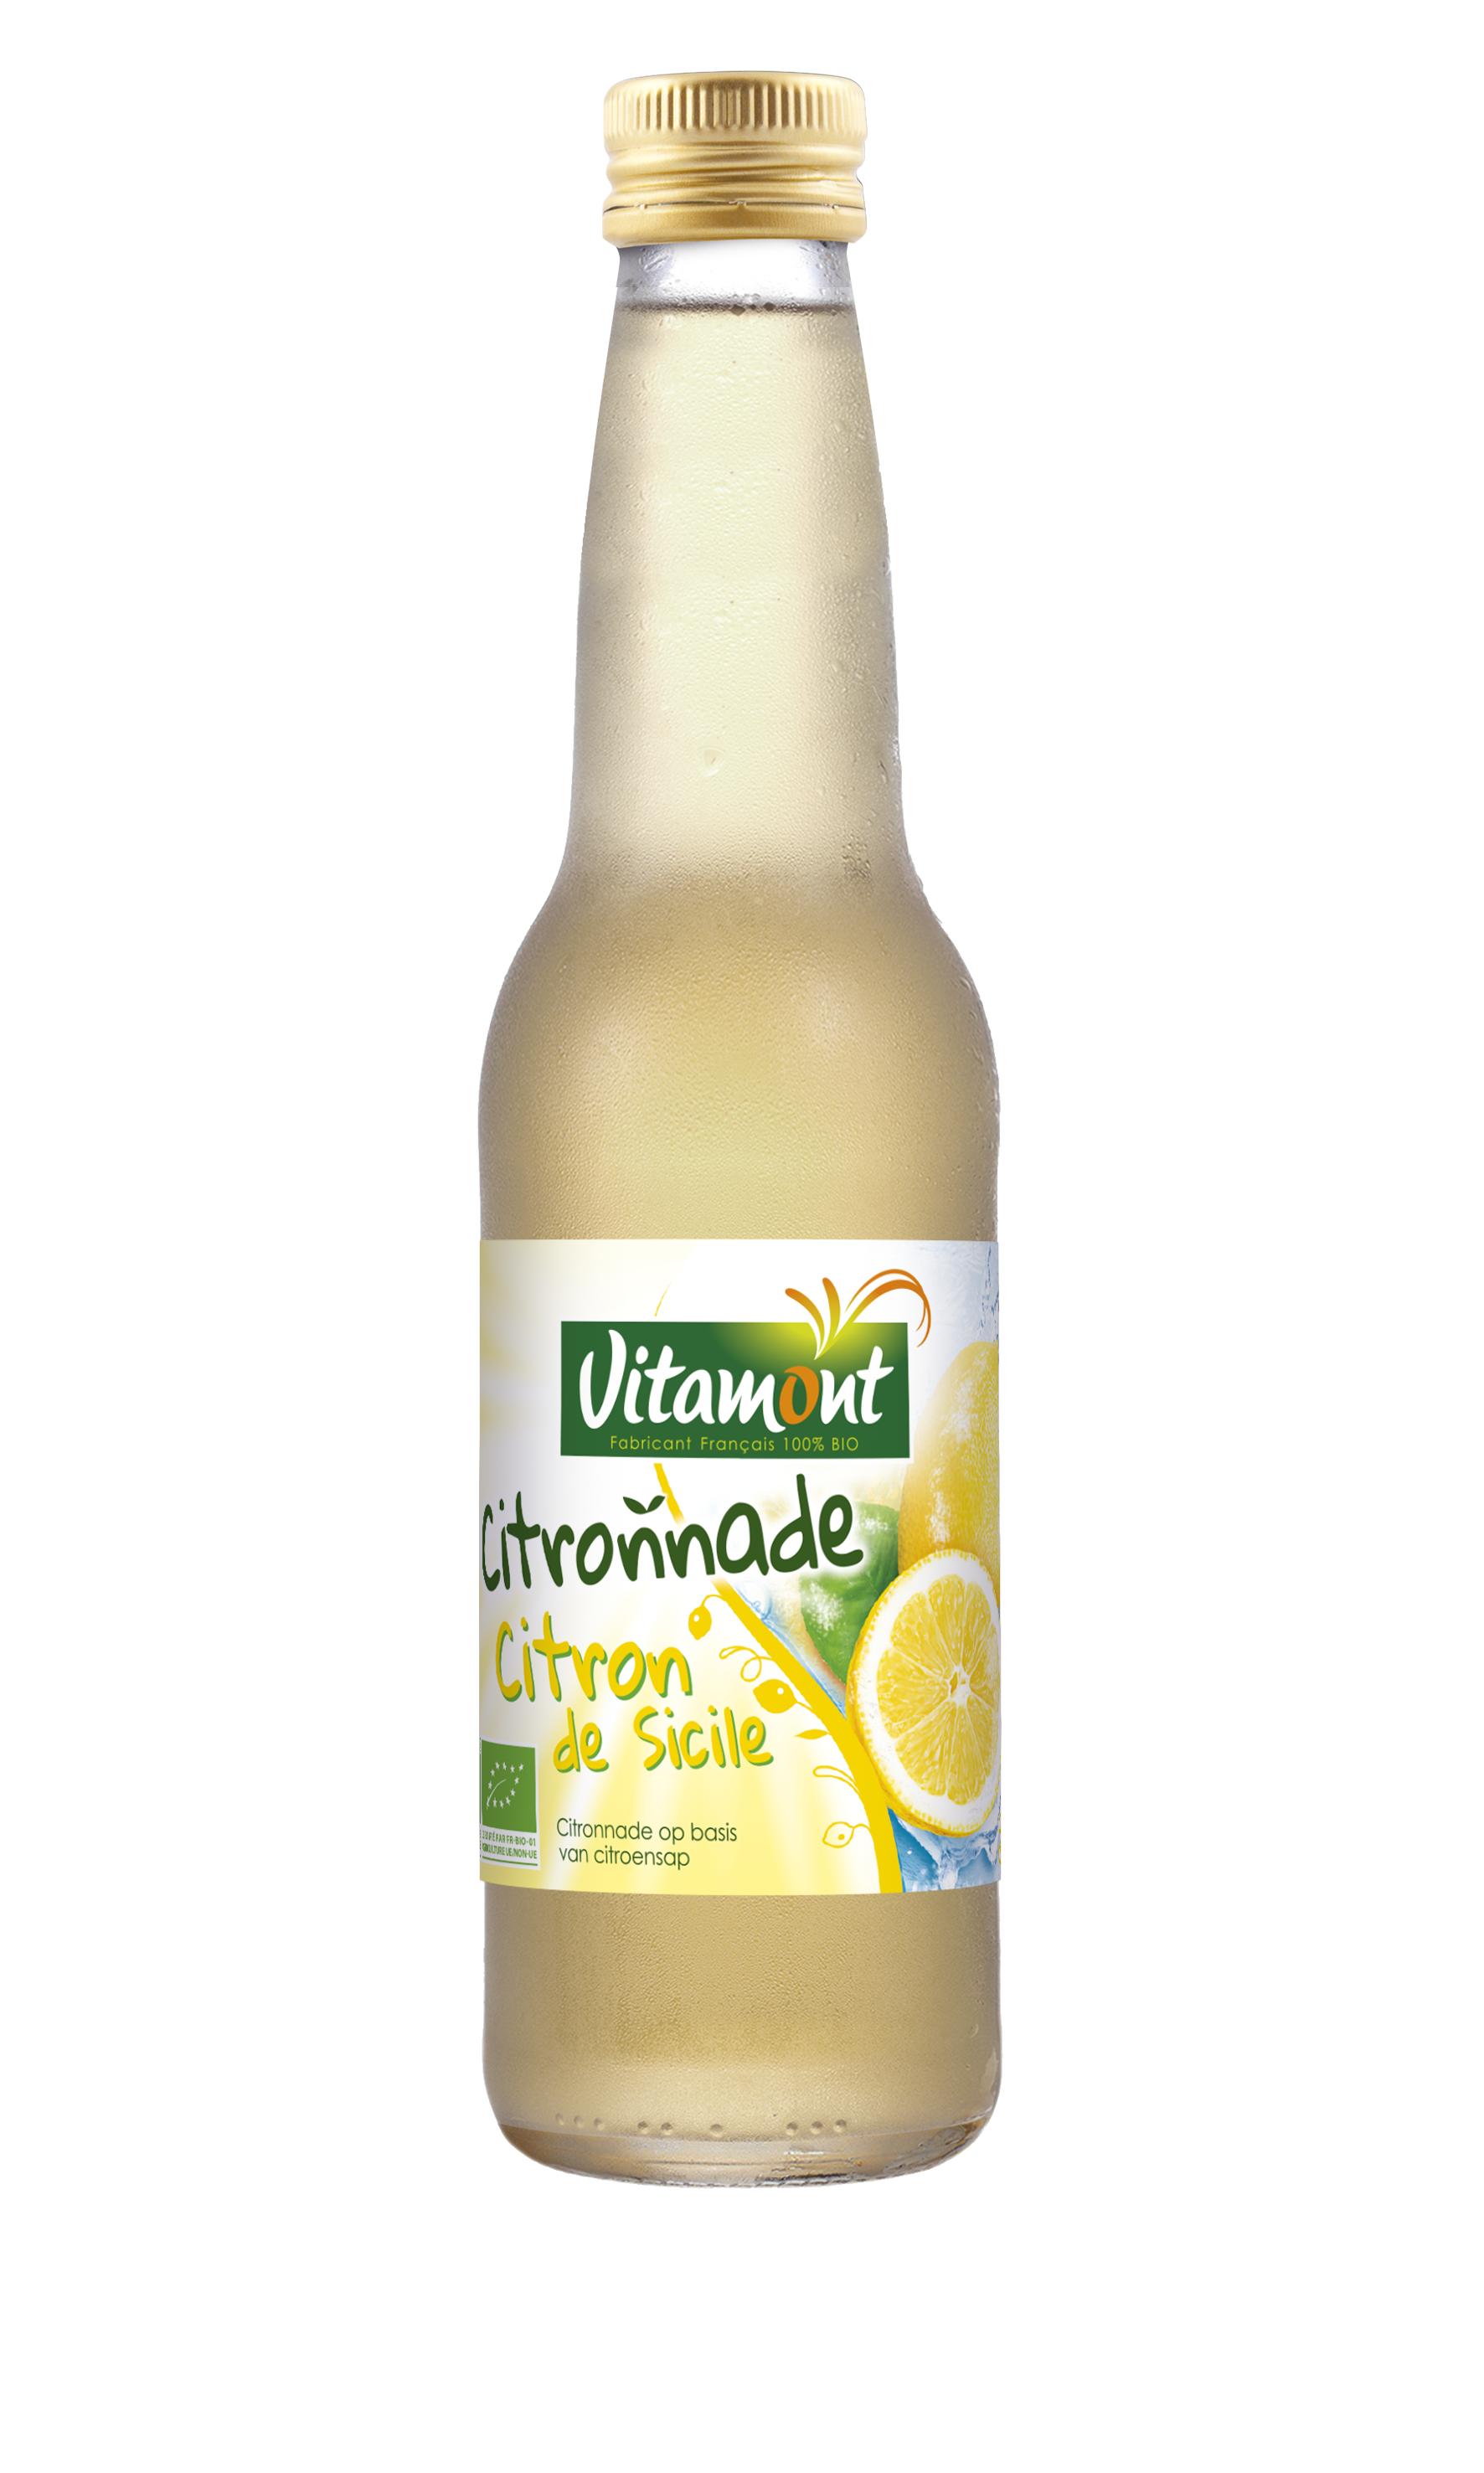 Organic Lemonade with Sicilia Lemon juice